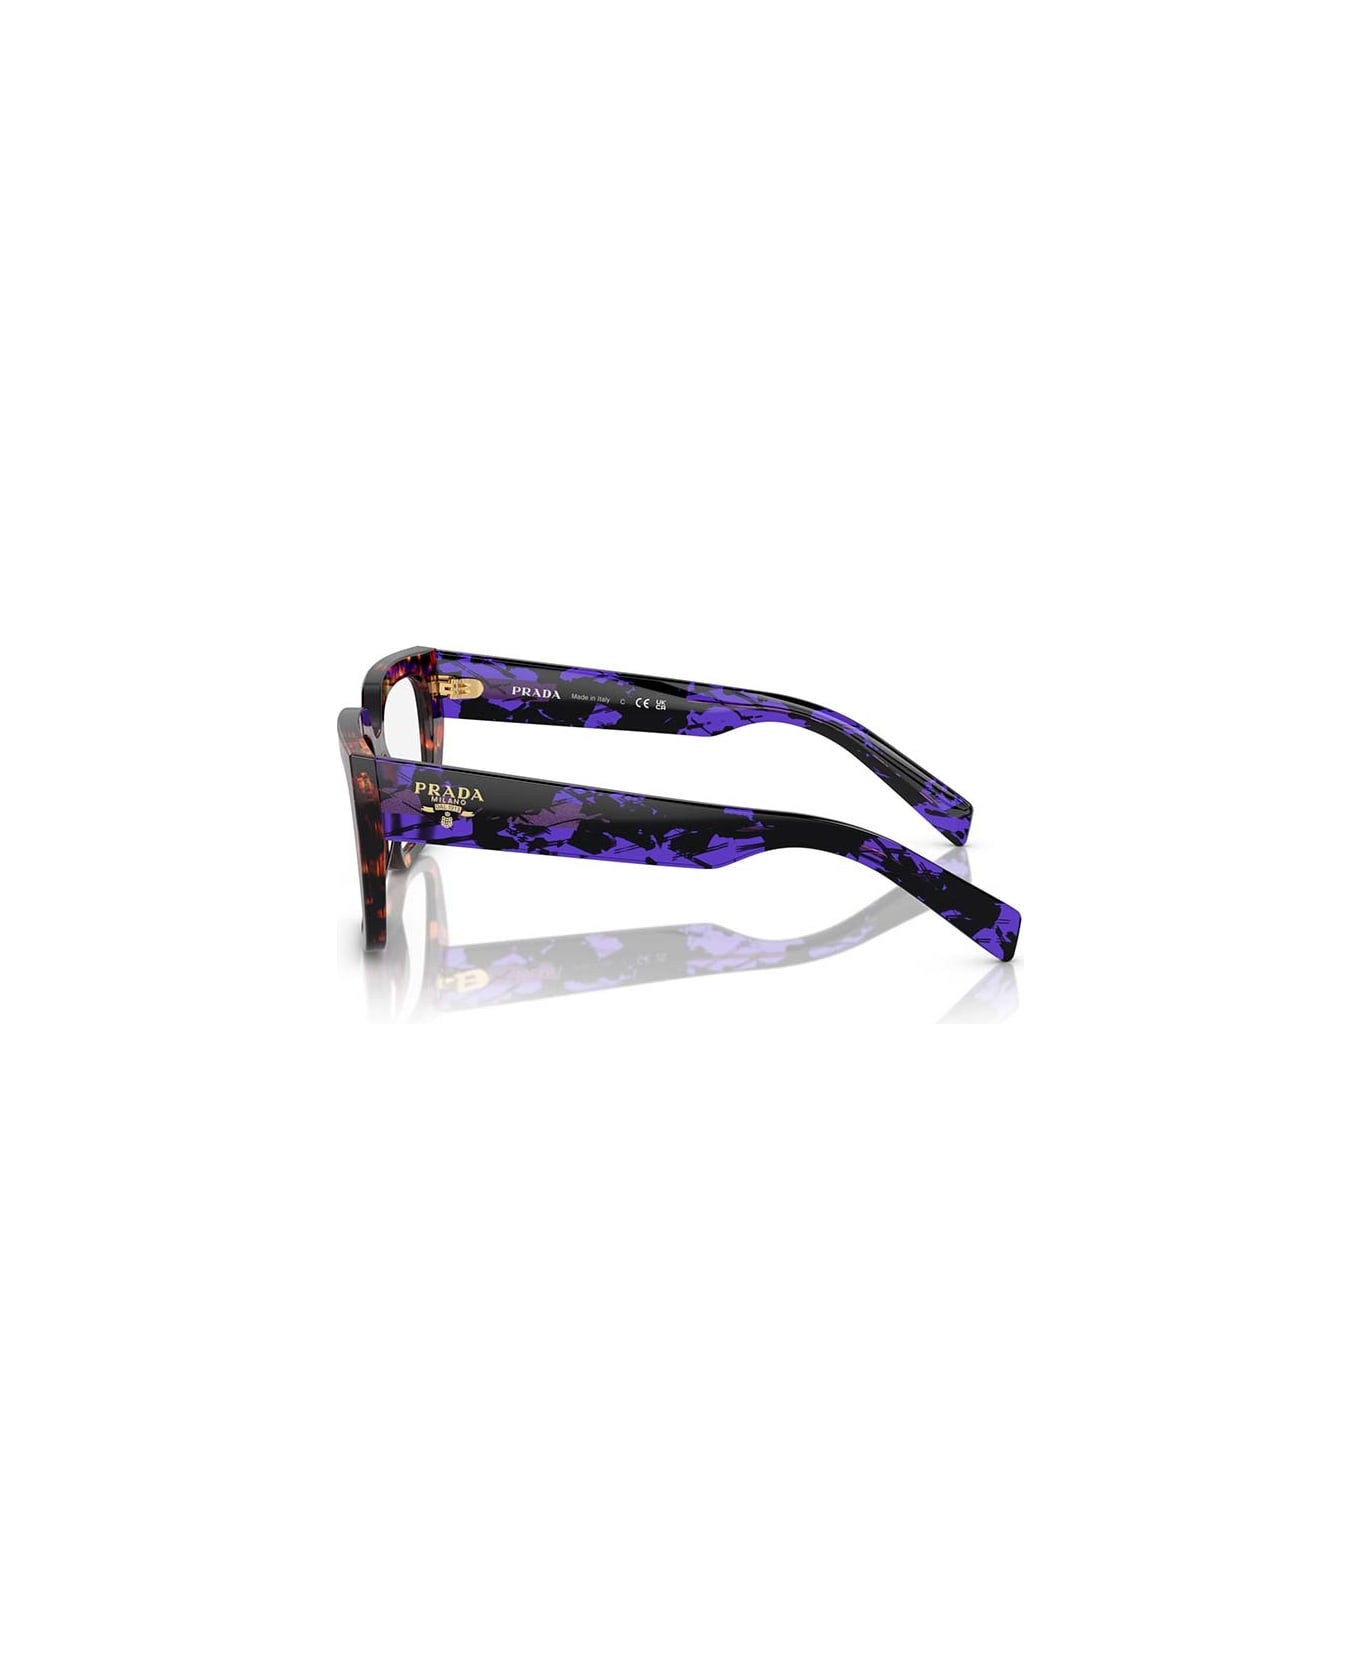 Prada Eyewear Glasses - Havana アイウェア